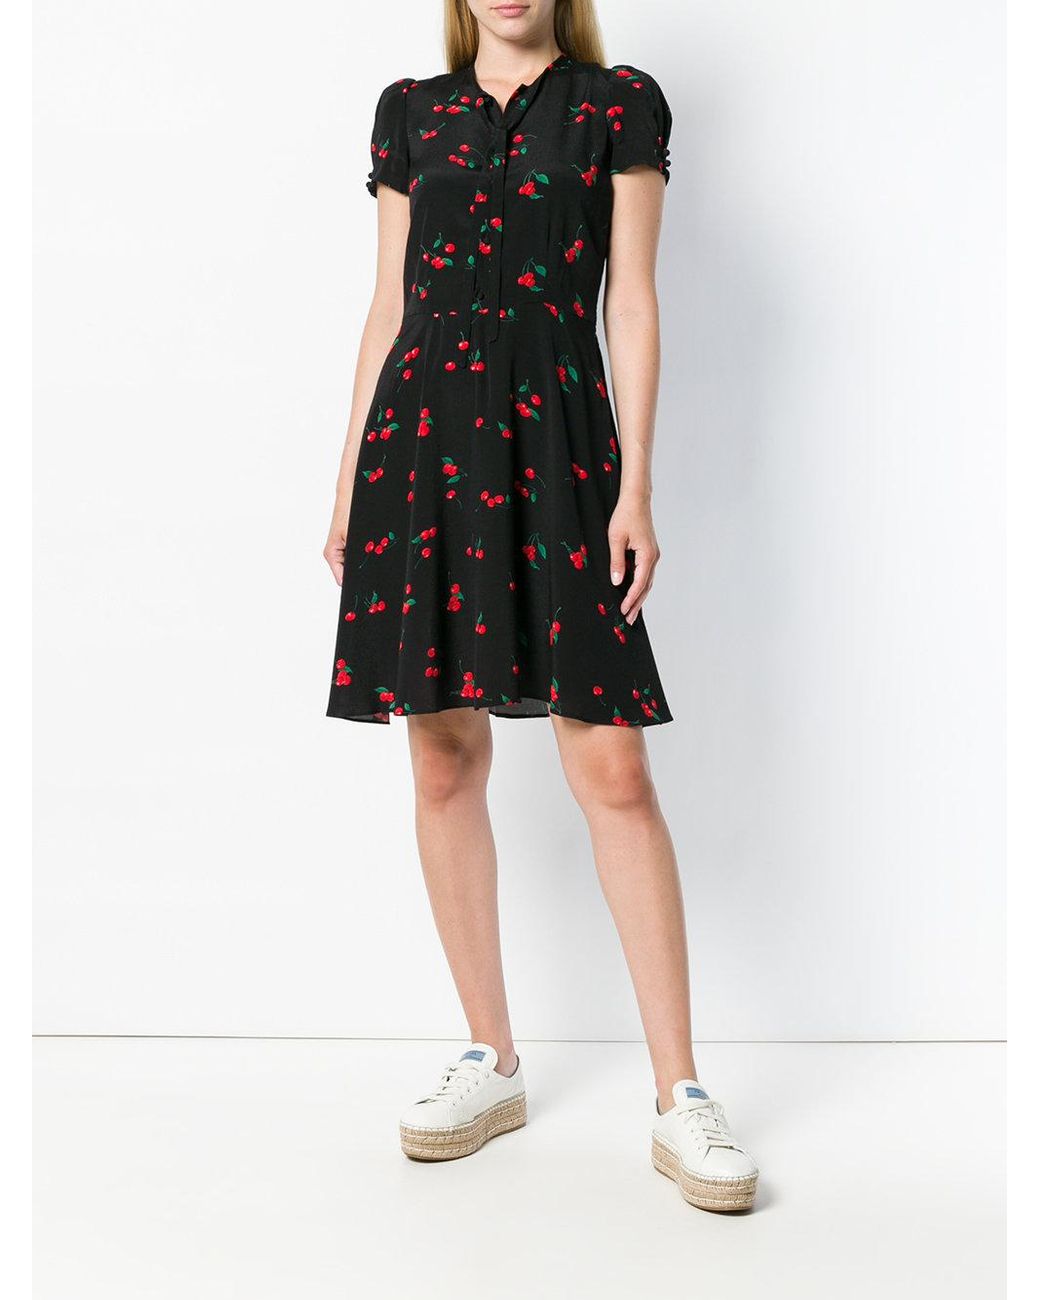 Polo Ralph Lauren Synthetic Cherry Print Dress in Black | Lyst UK